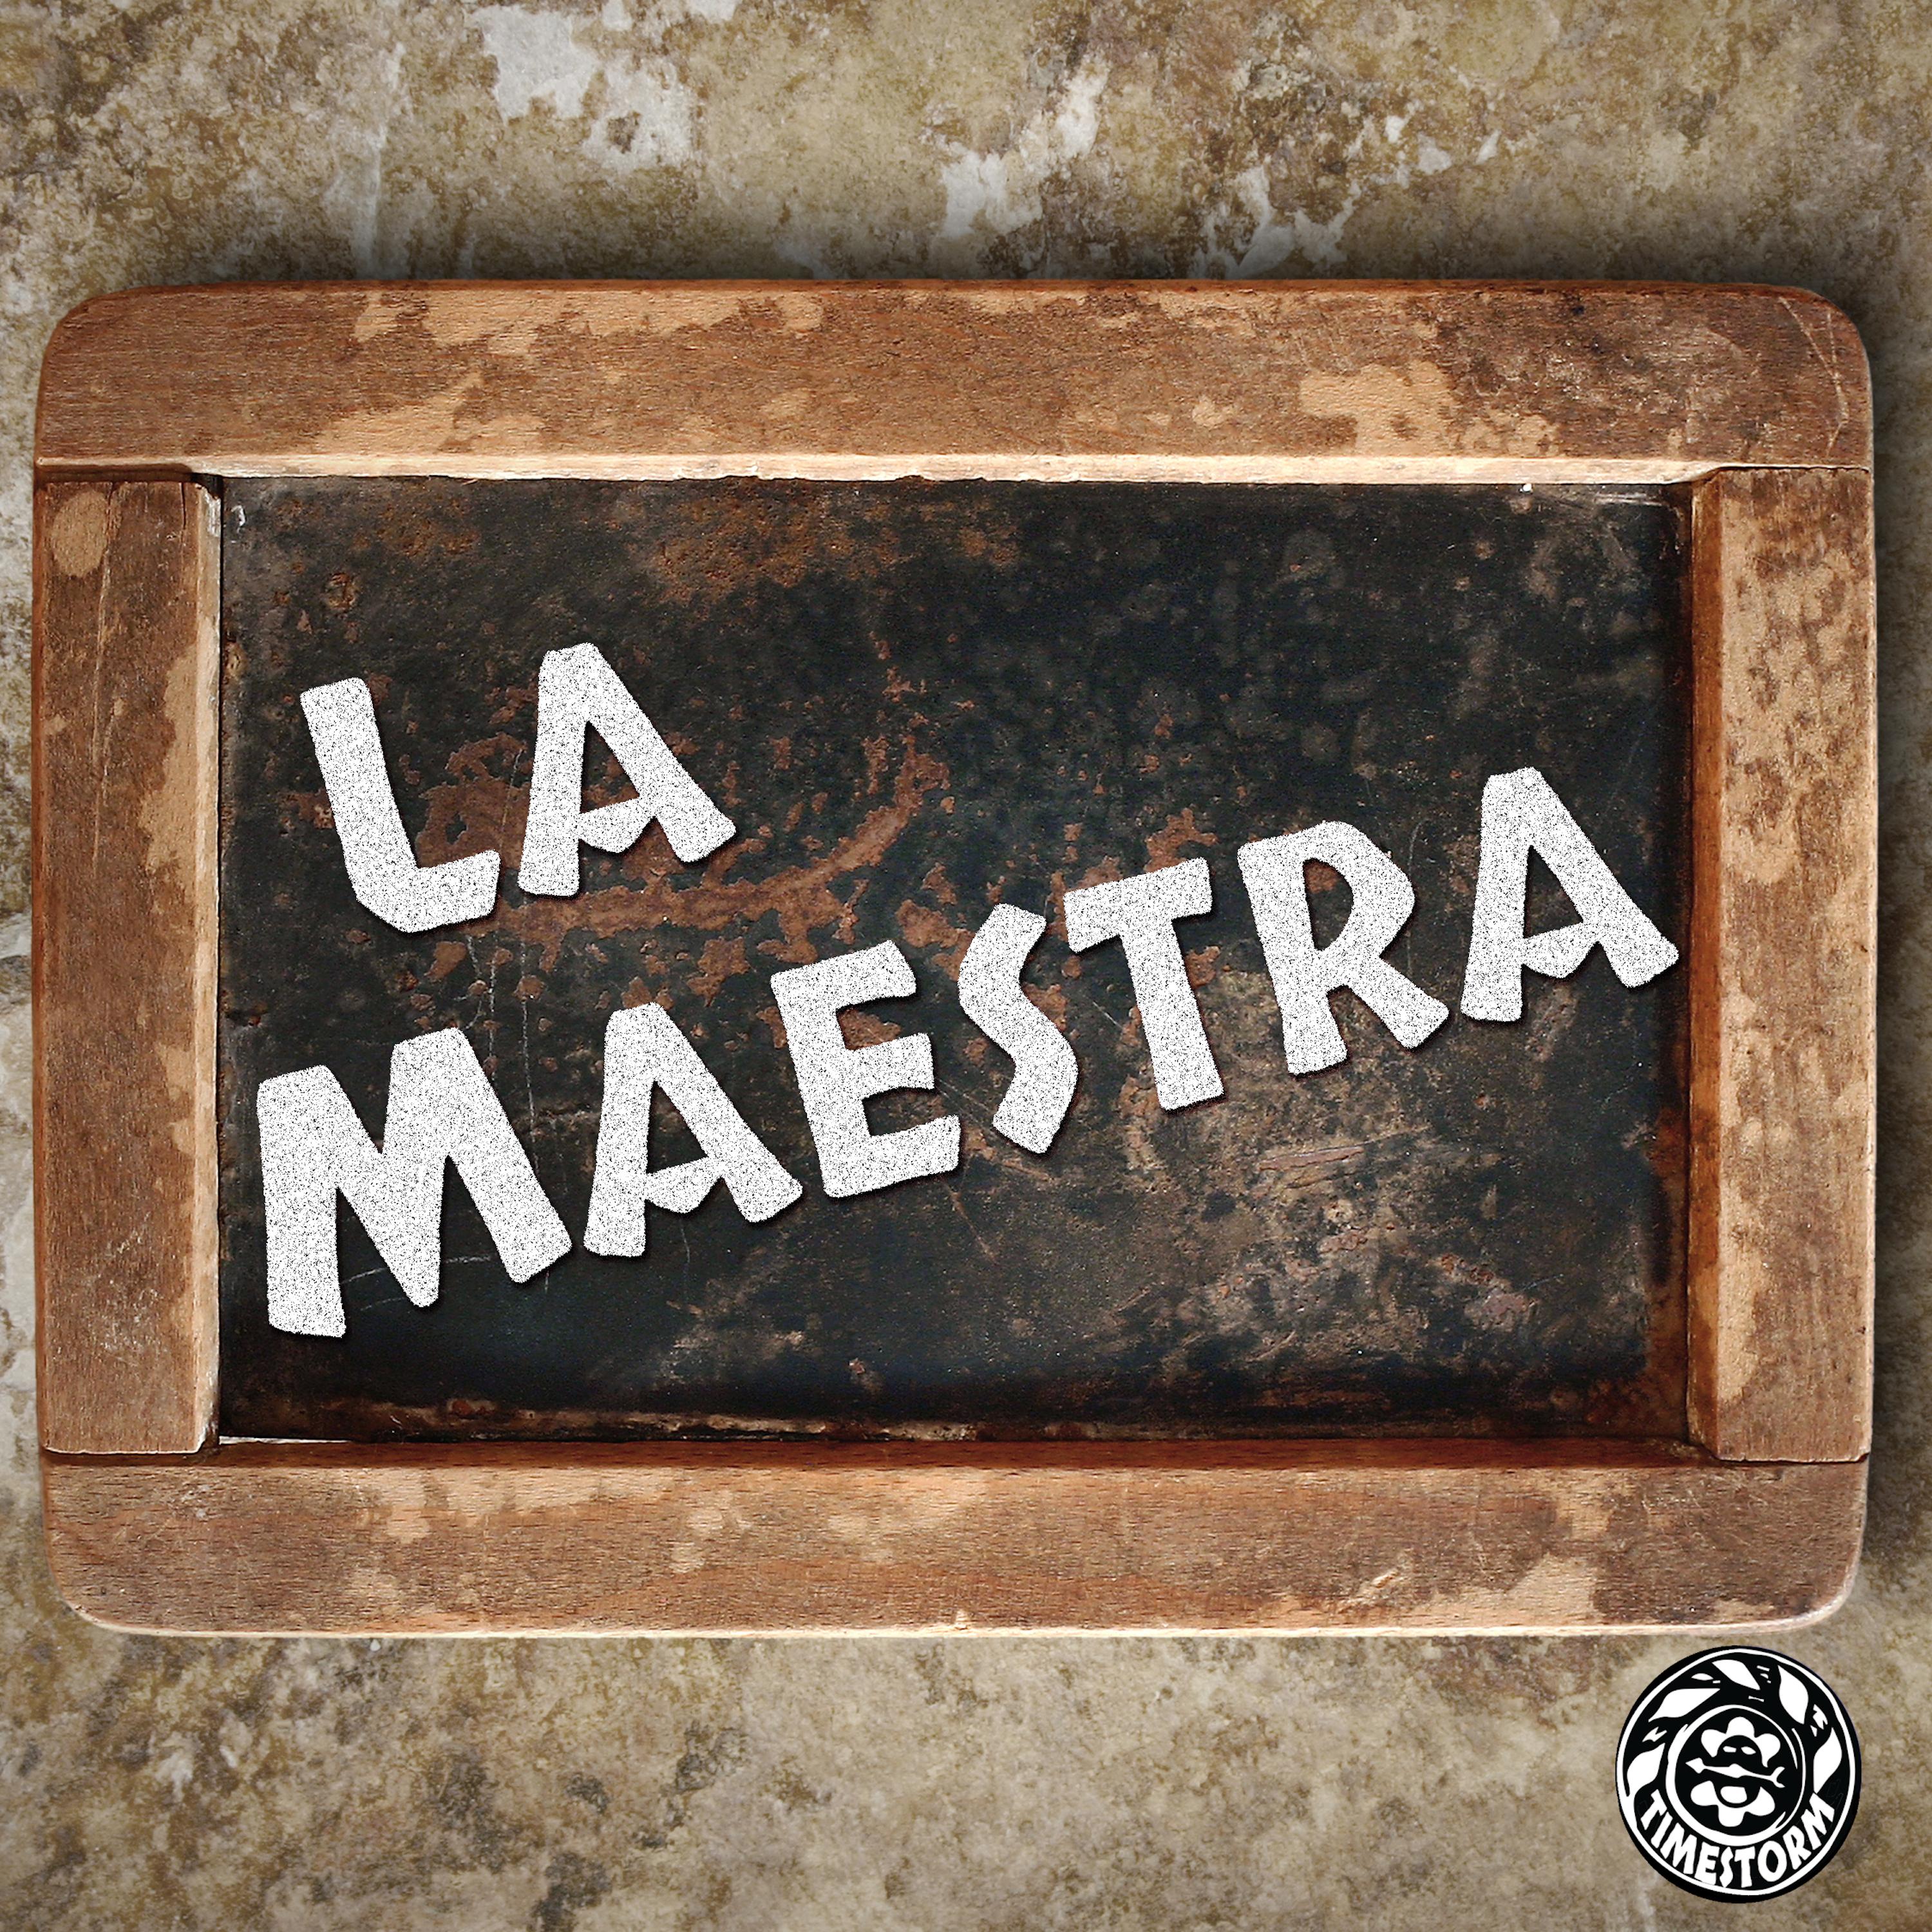 Thumbnail for "Episode 4: La Maestra".